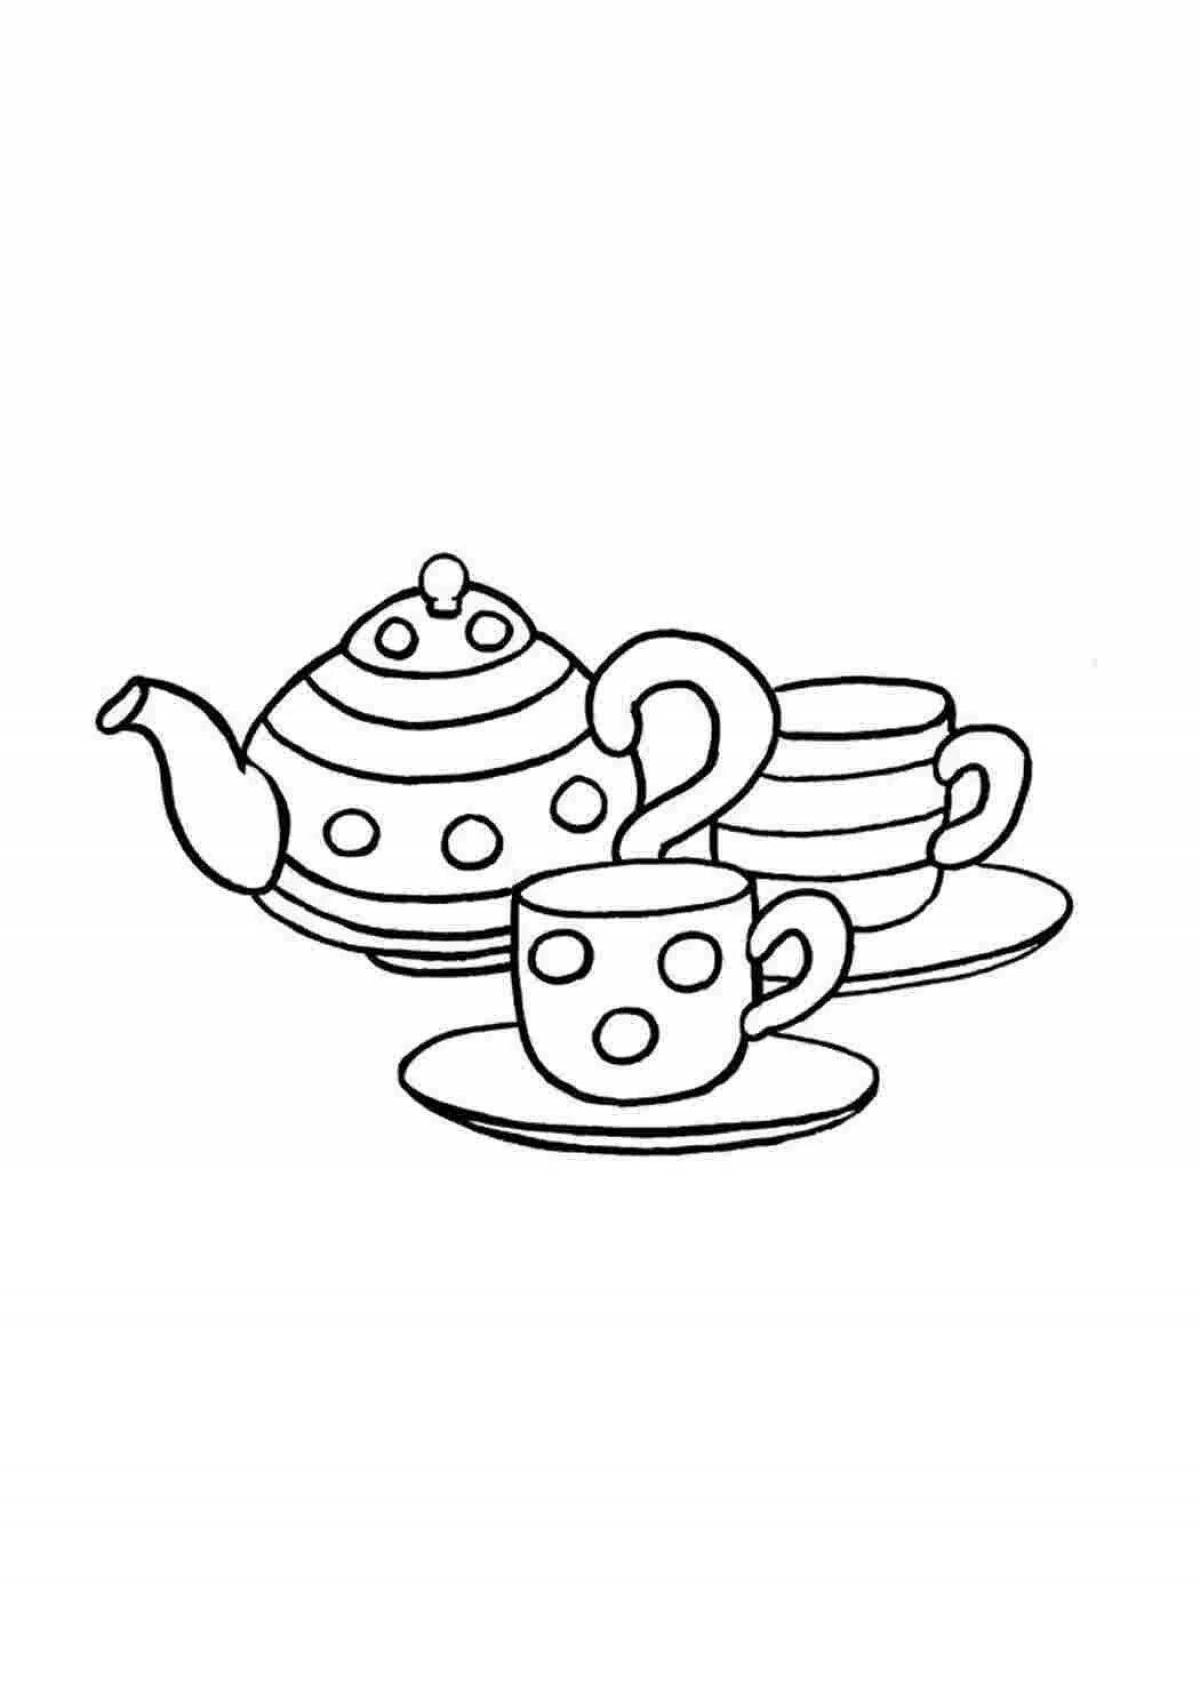 Cute tea set coloring page